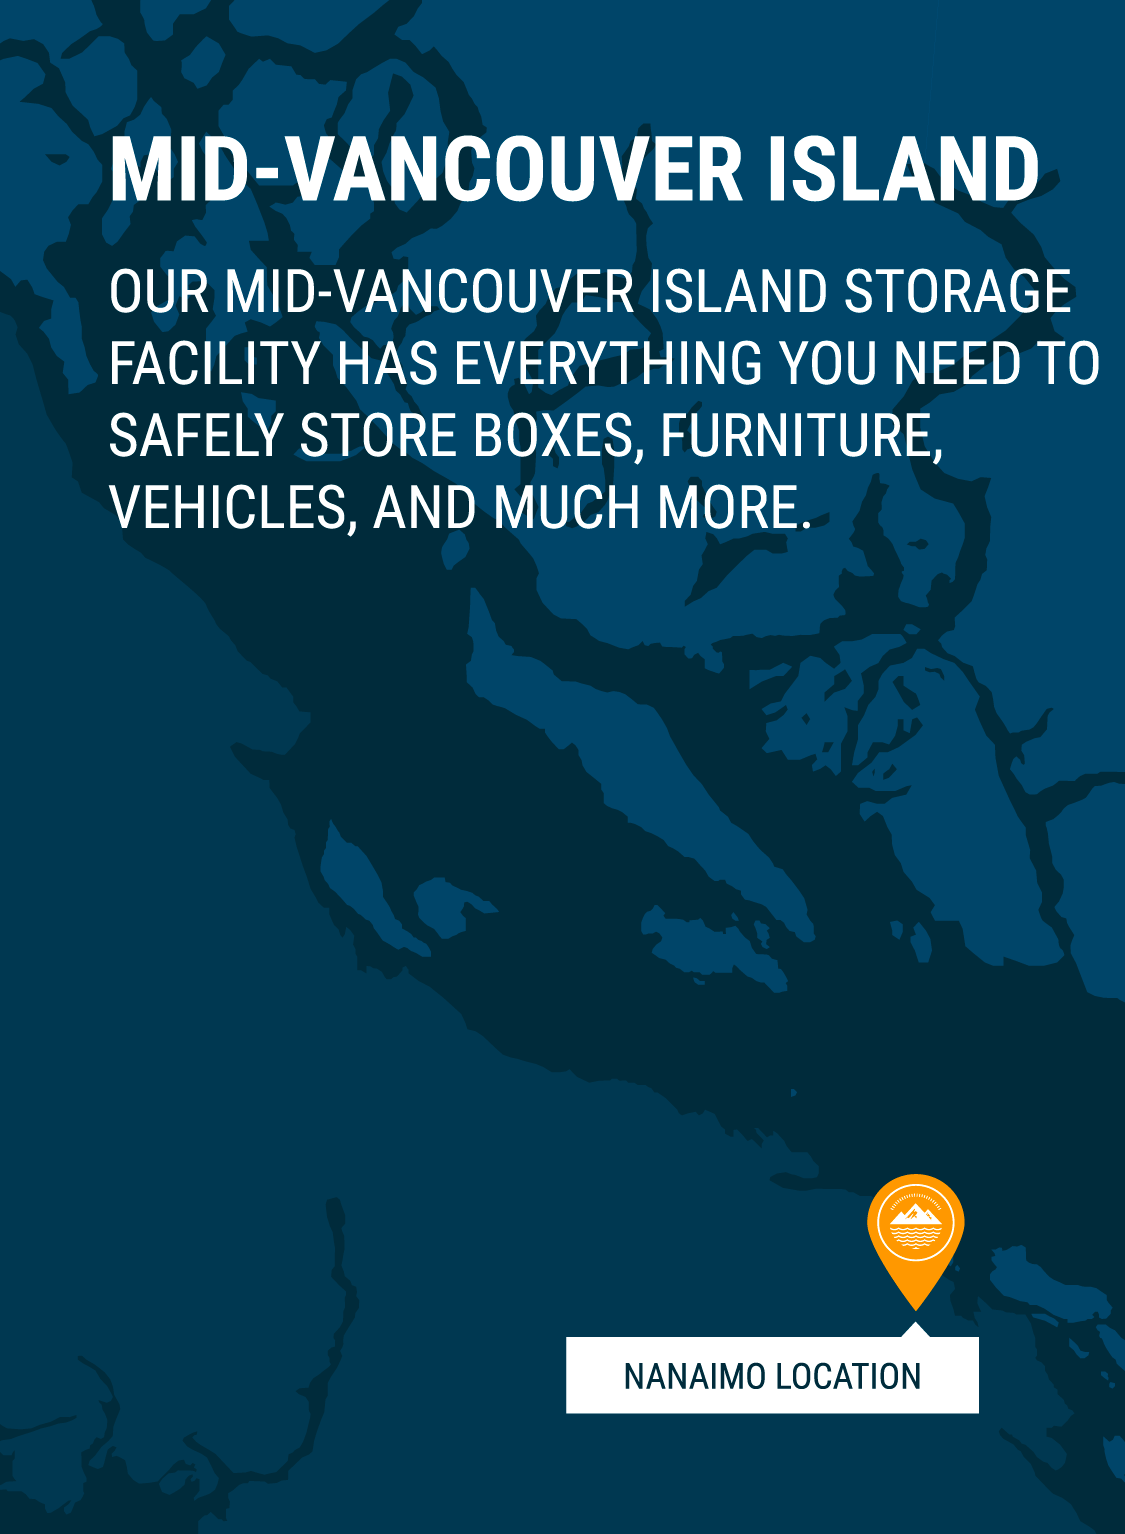 Pacific Rim Storage Mid-Vancouver Island locations